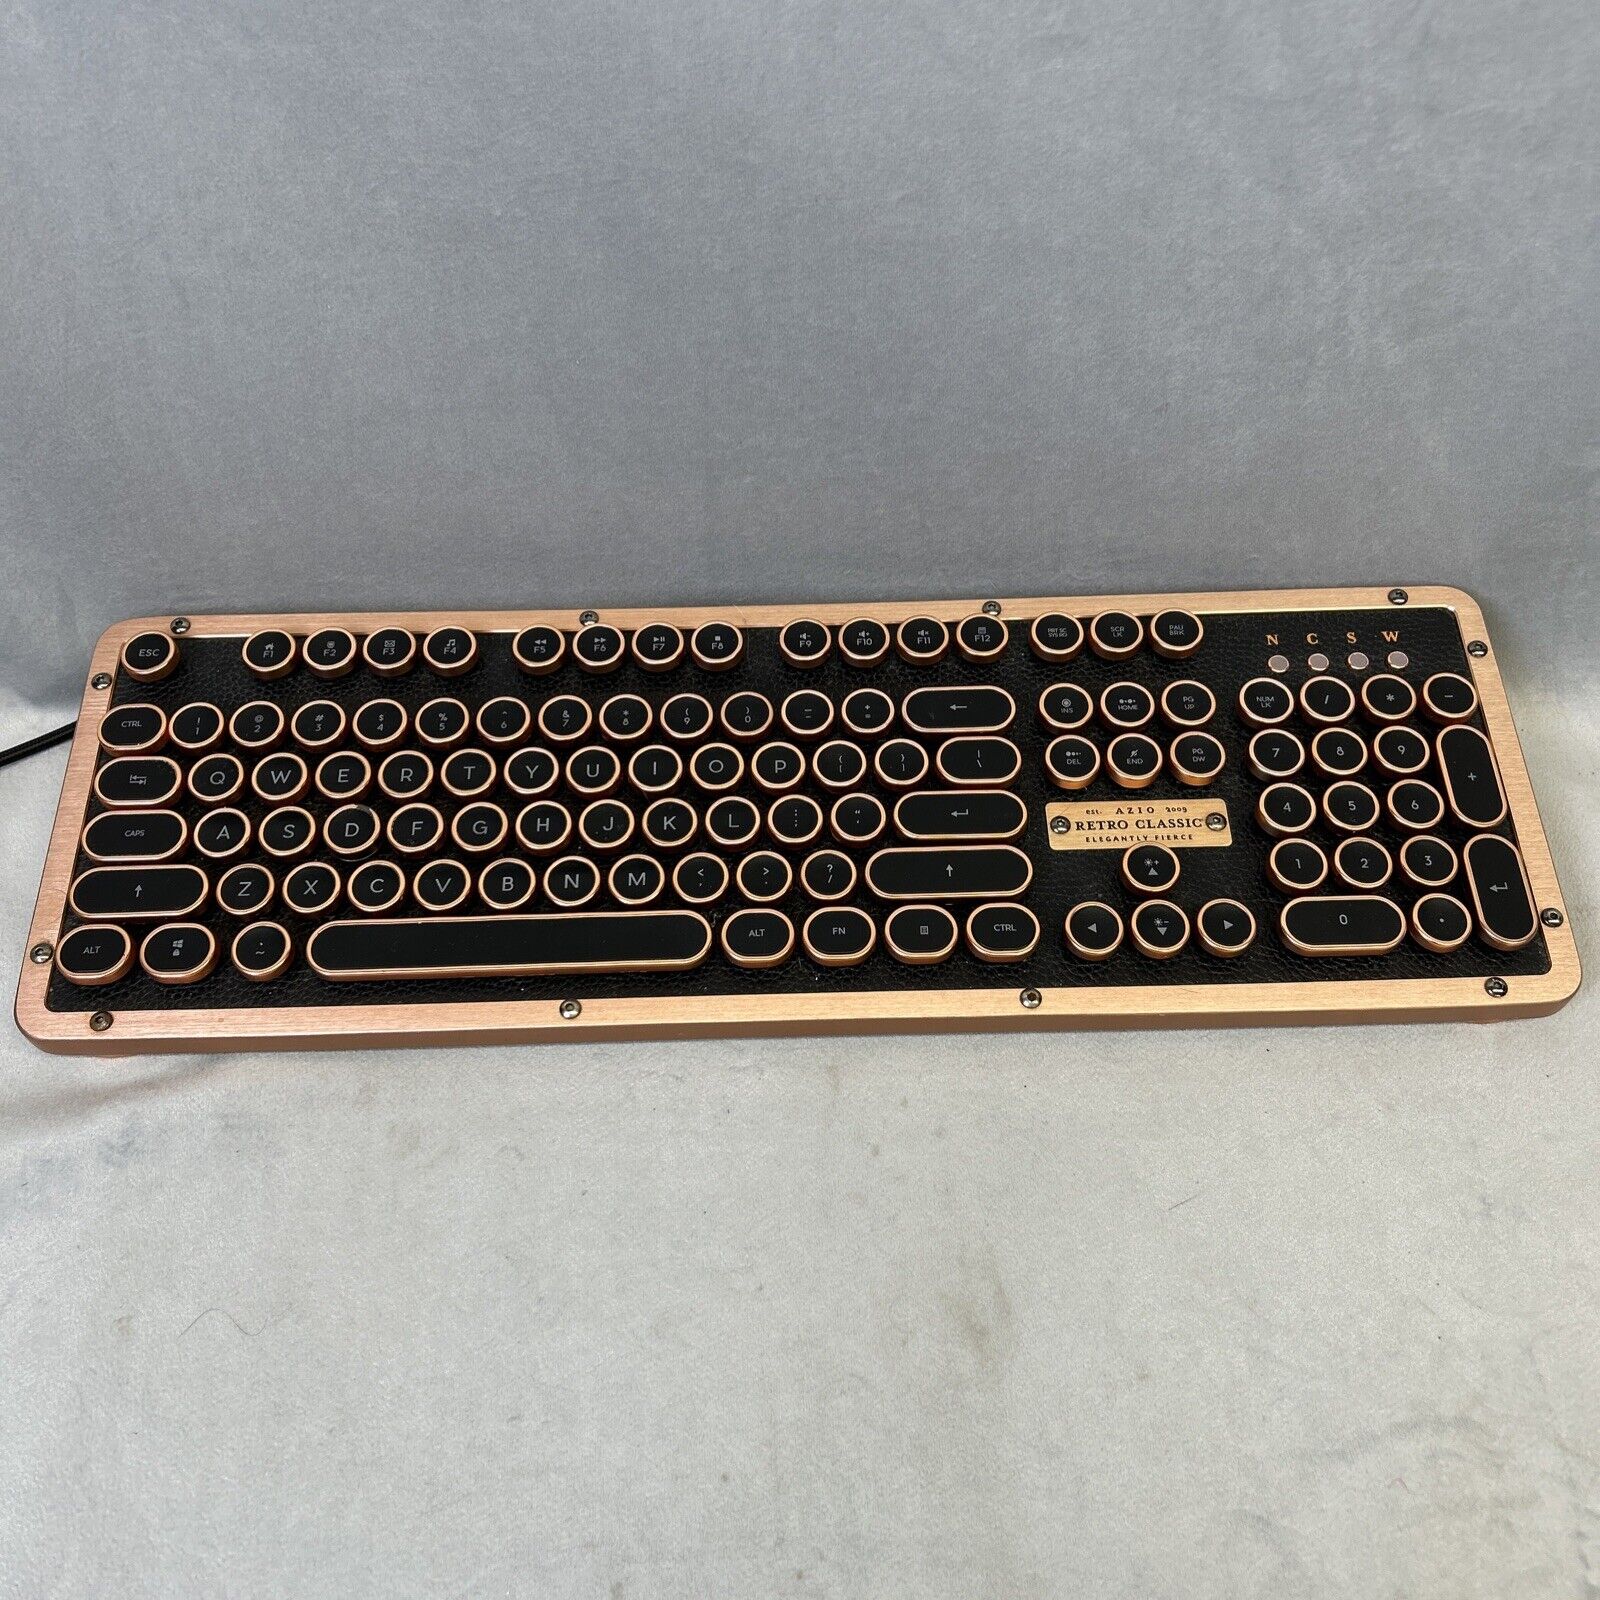 AZIO Keyboard Retro Classic Typewriter Backlit Mechanical Computer USB Rose Gold